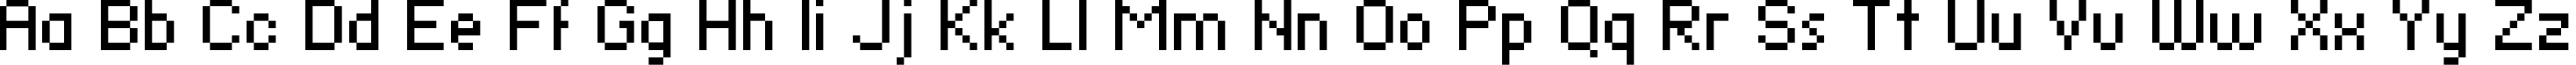 Пример написания английского алфавита шрифтом standard 07_55